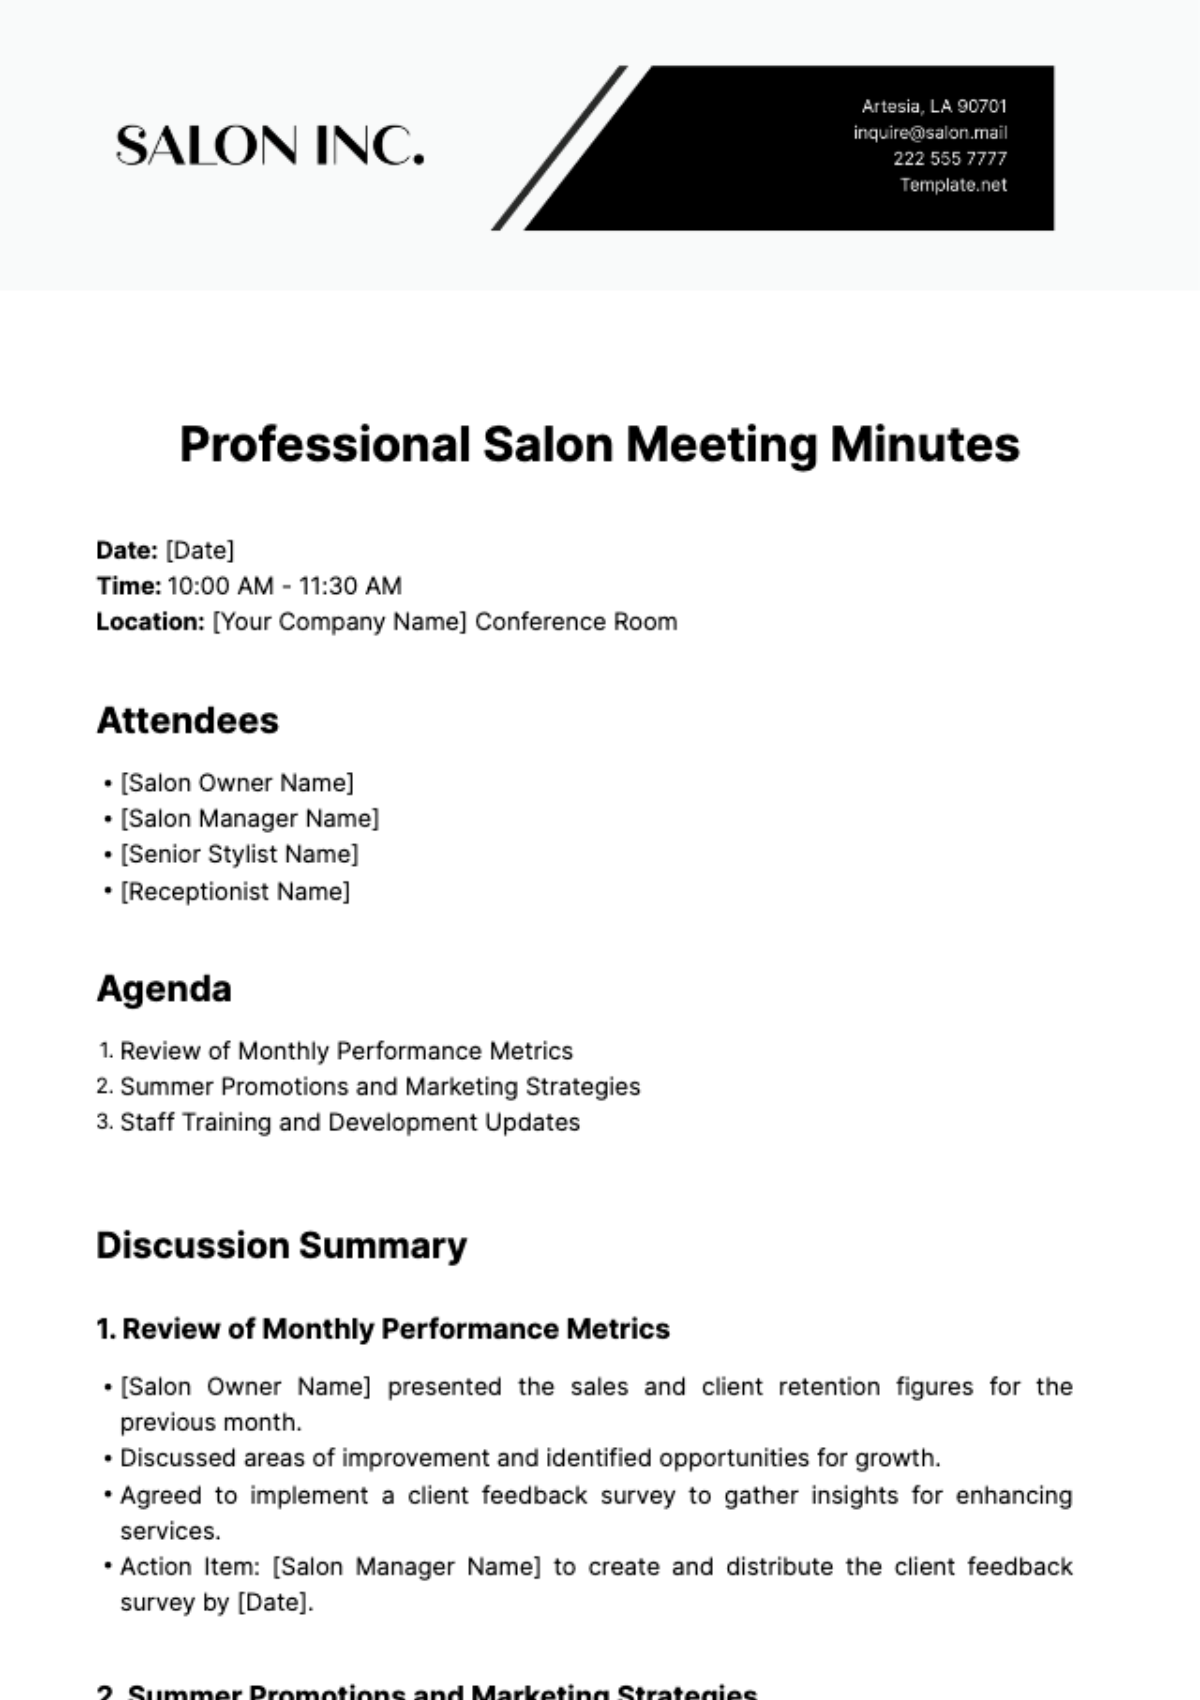 Professional Salon Meeting Minute Template